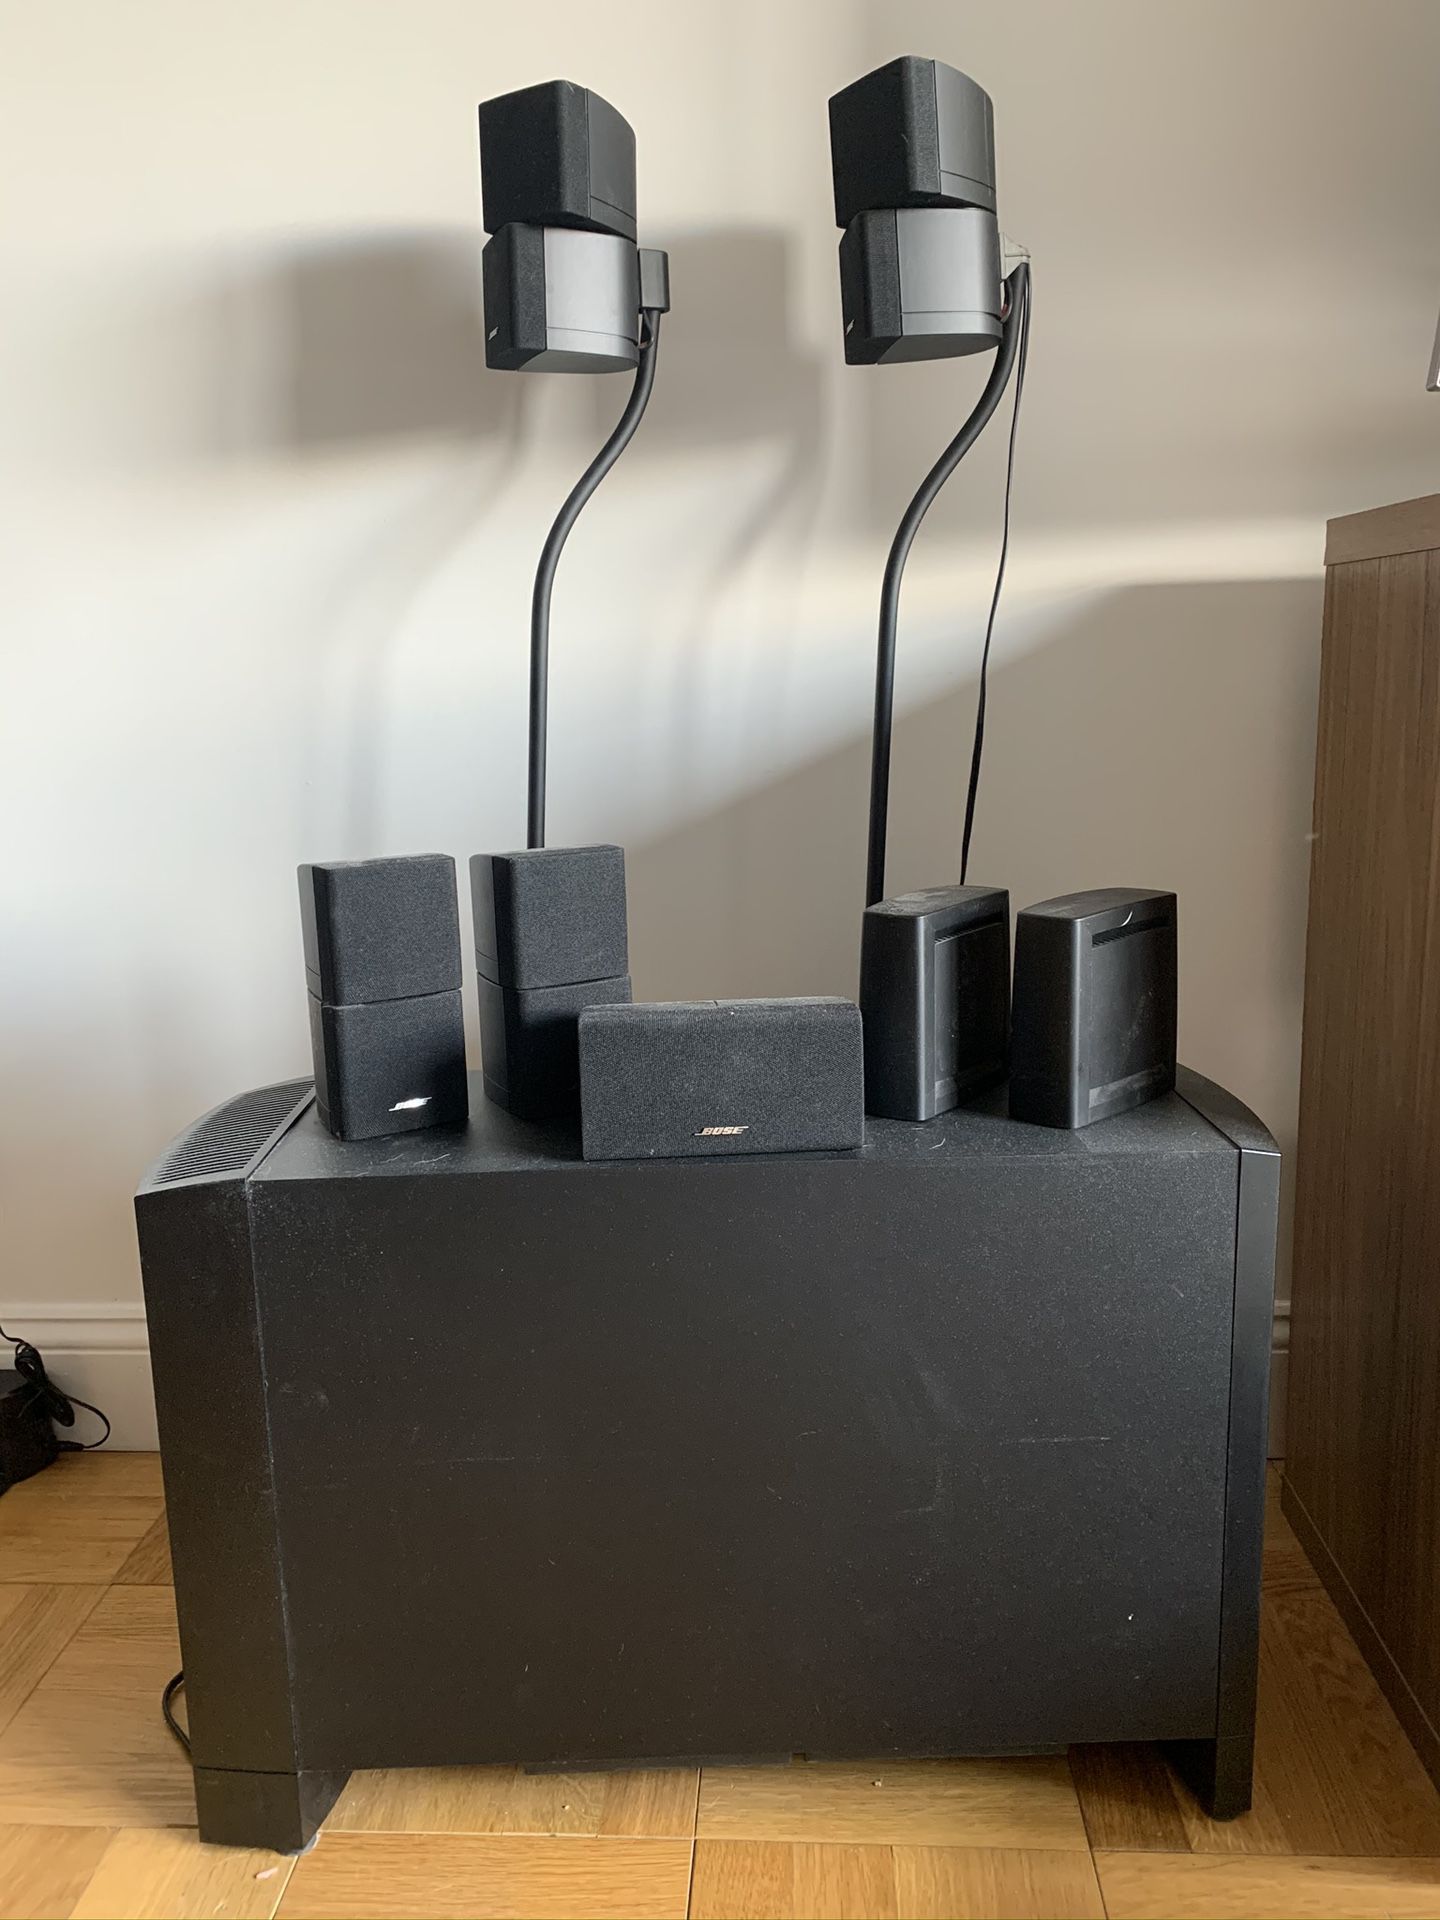 Bose Acoustimass 10 series IV sound system